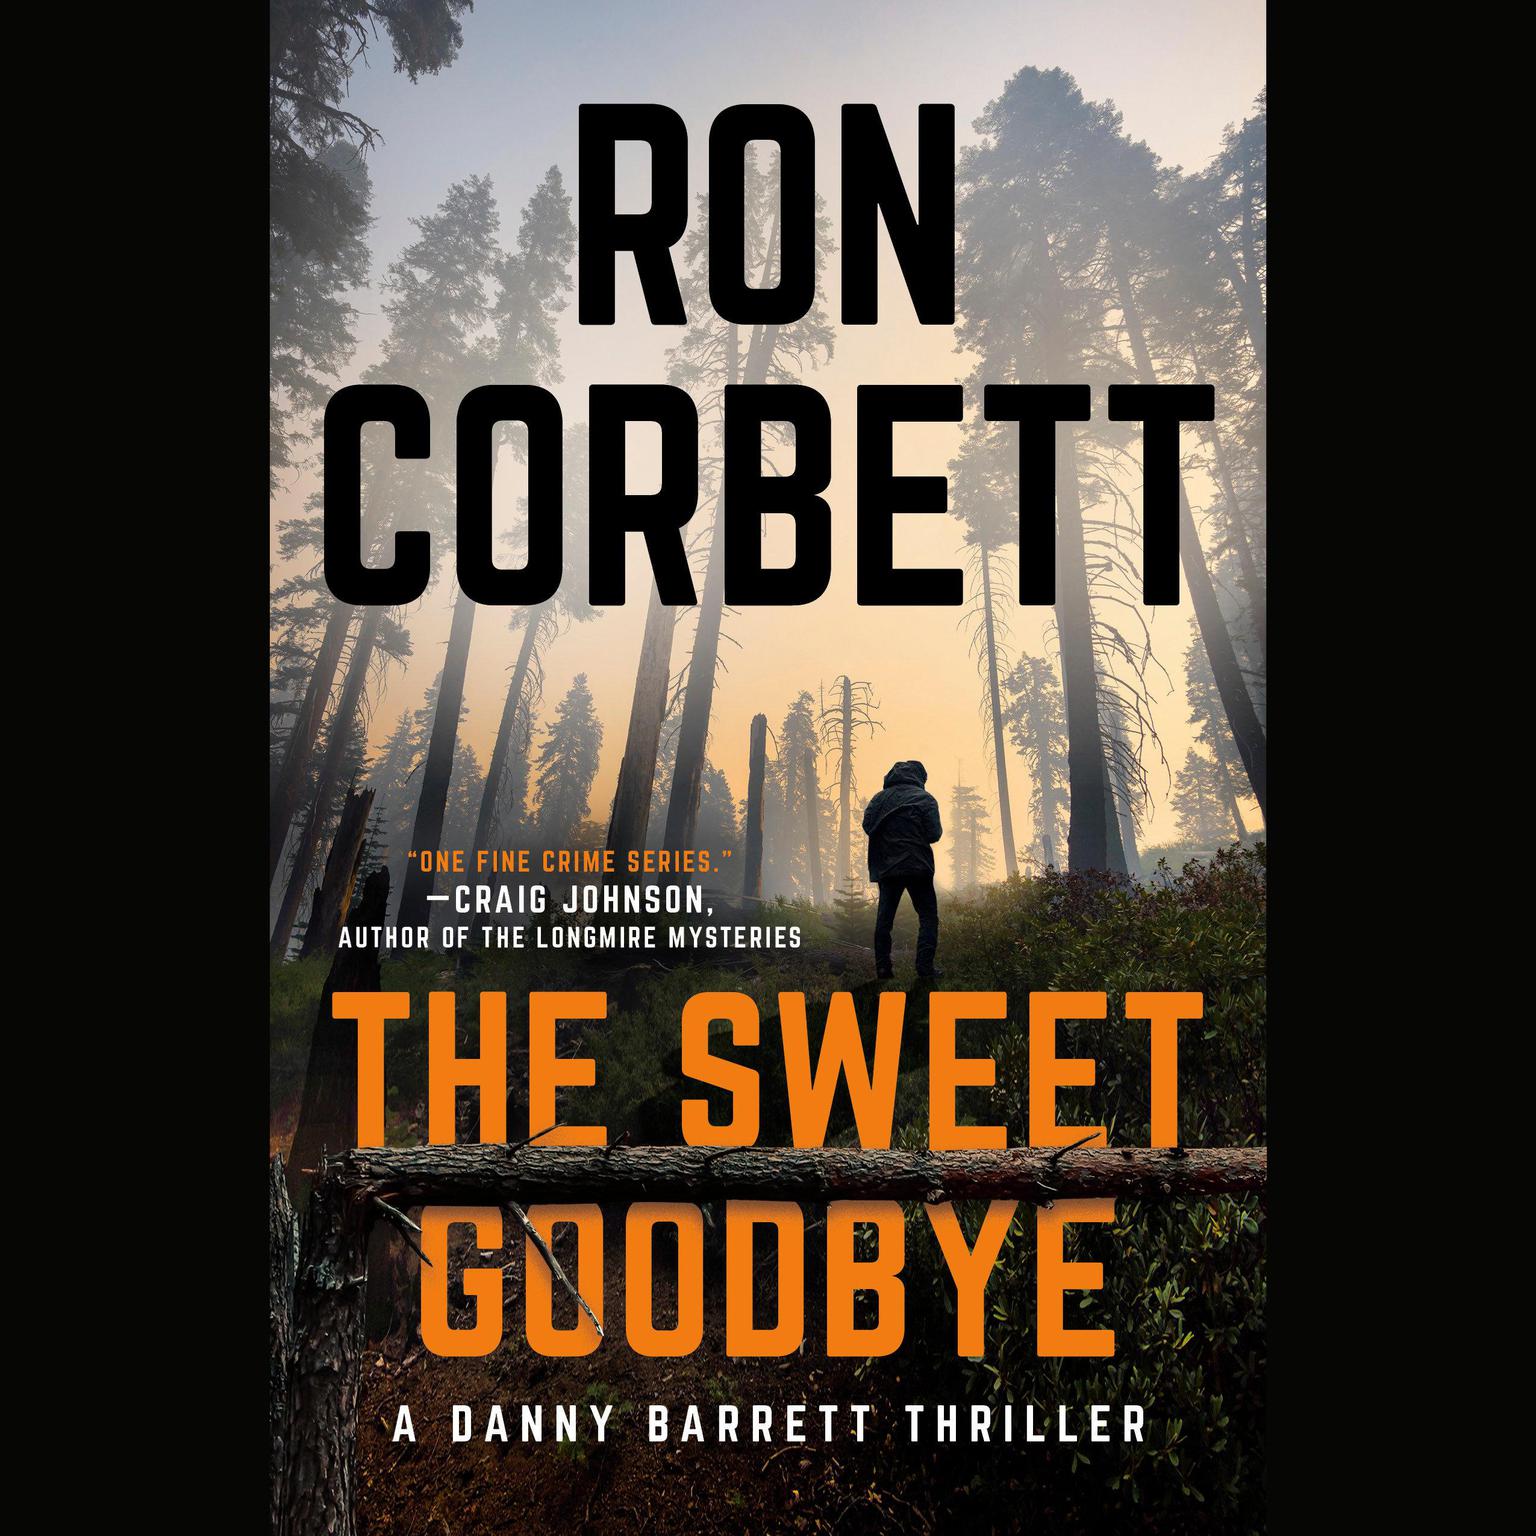 The Sweet Goodbye Audiobook, by Ron Corbett